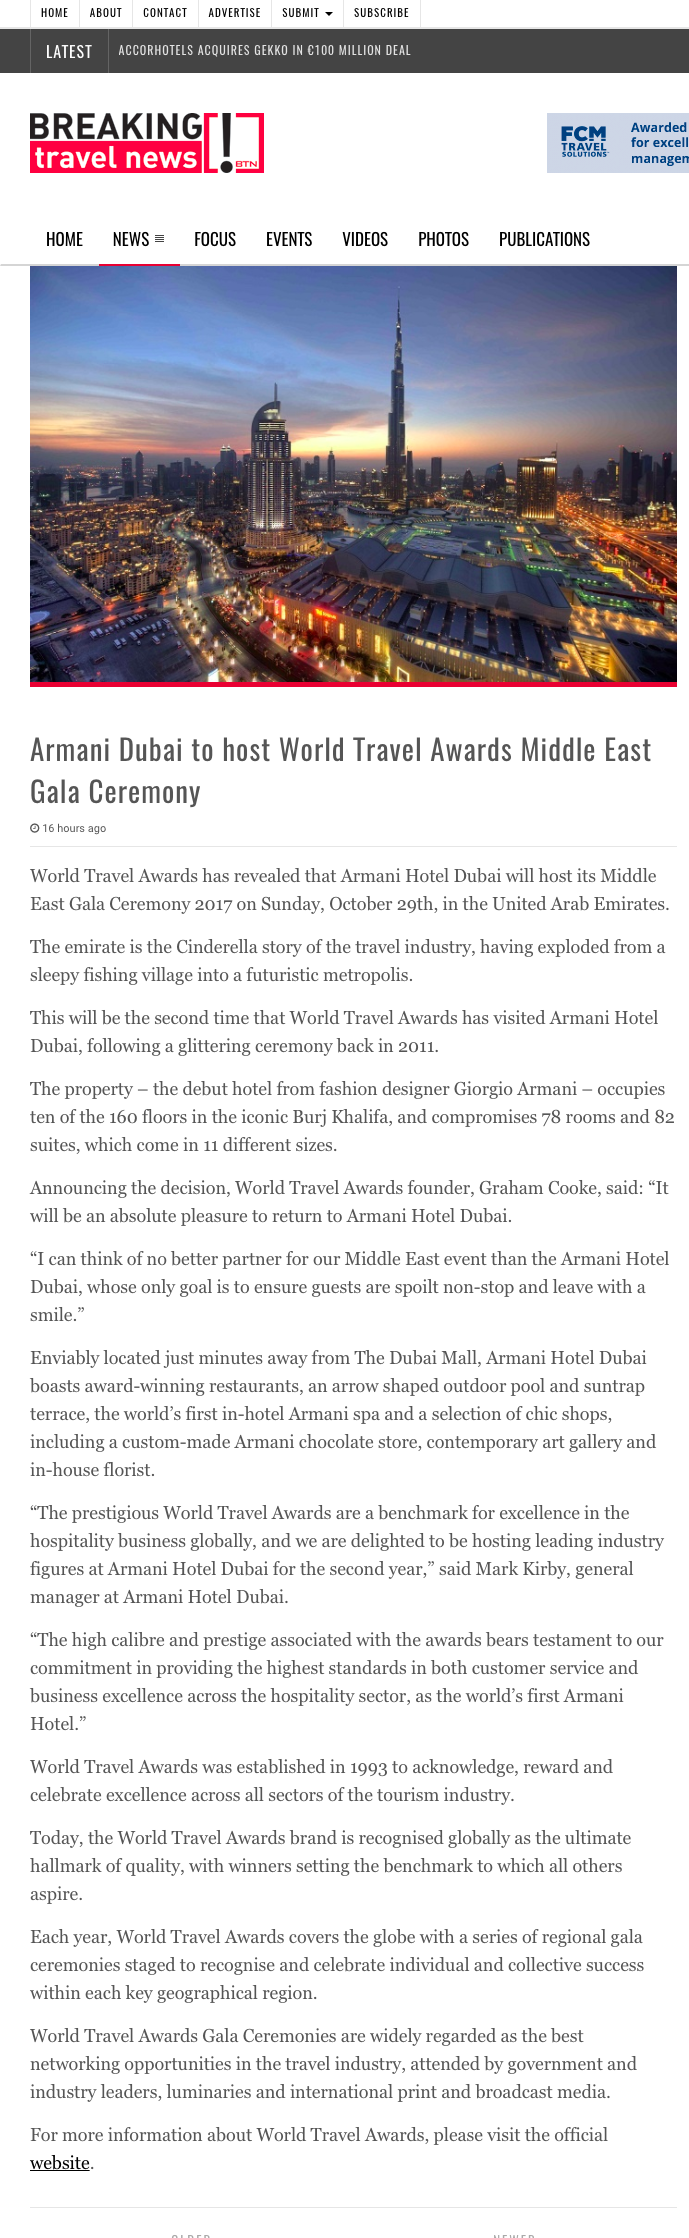 Armani Dubai to host World Travel Awards Middle East Gala Ceremony 2017